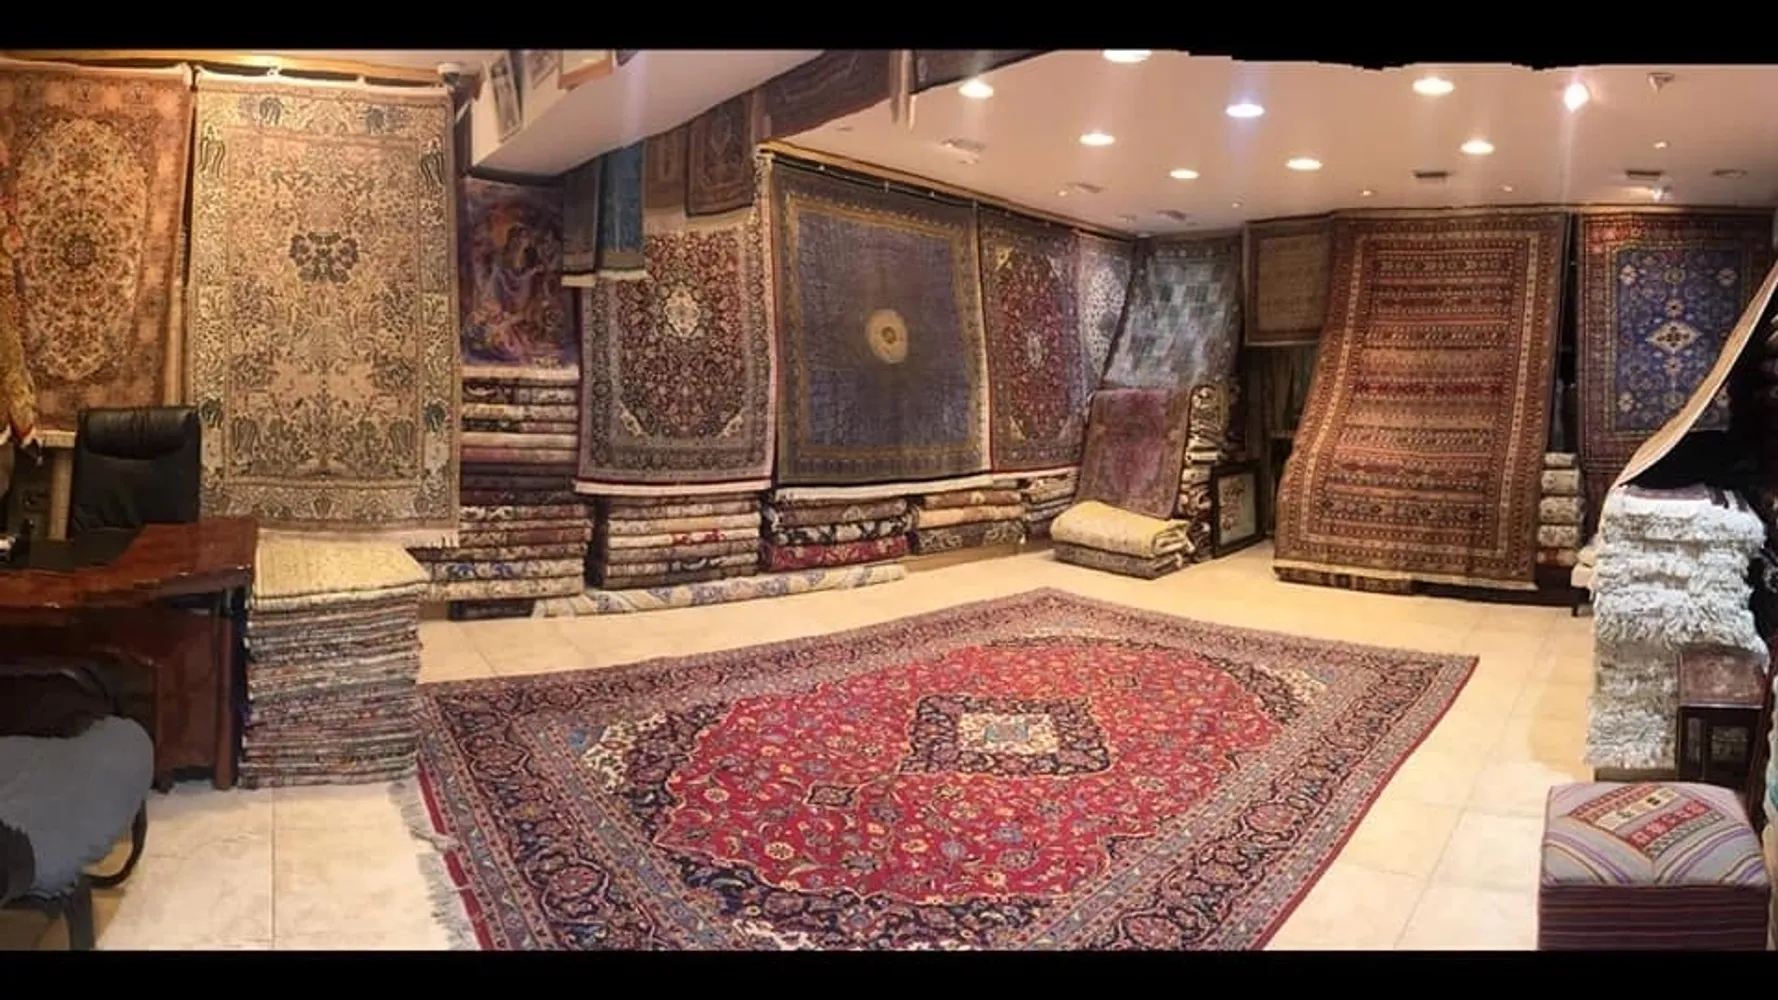 Hand made rugs UAE